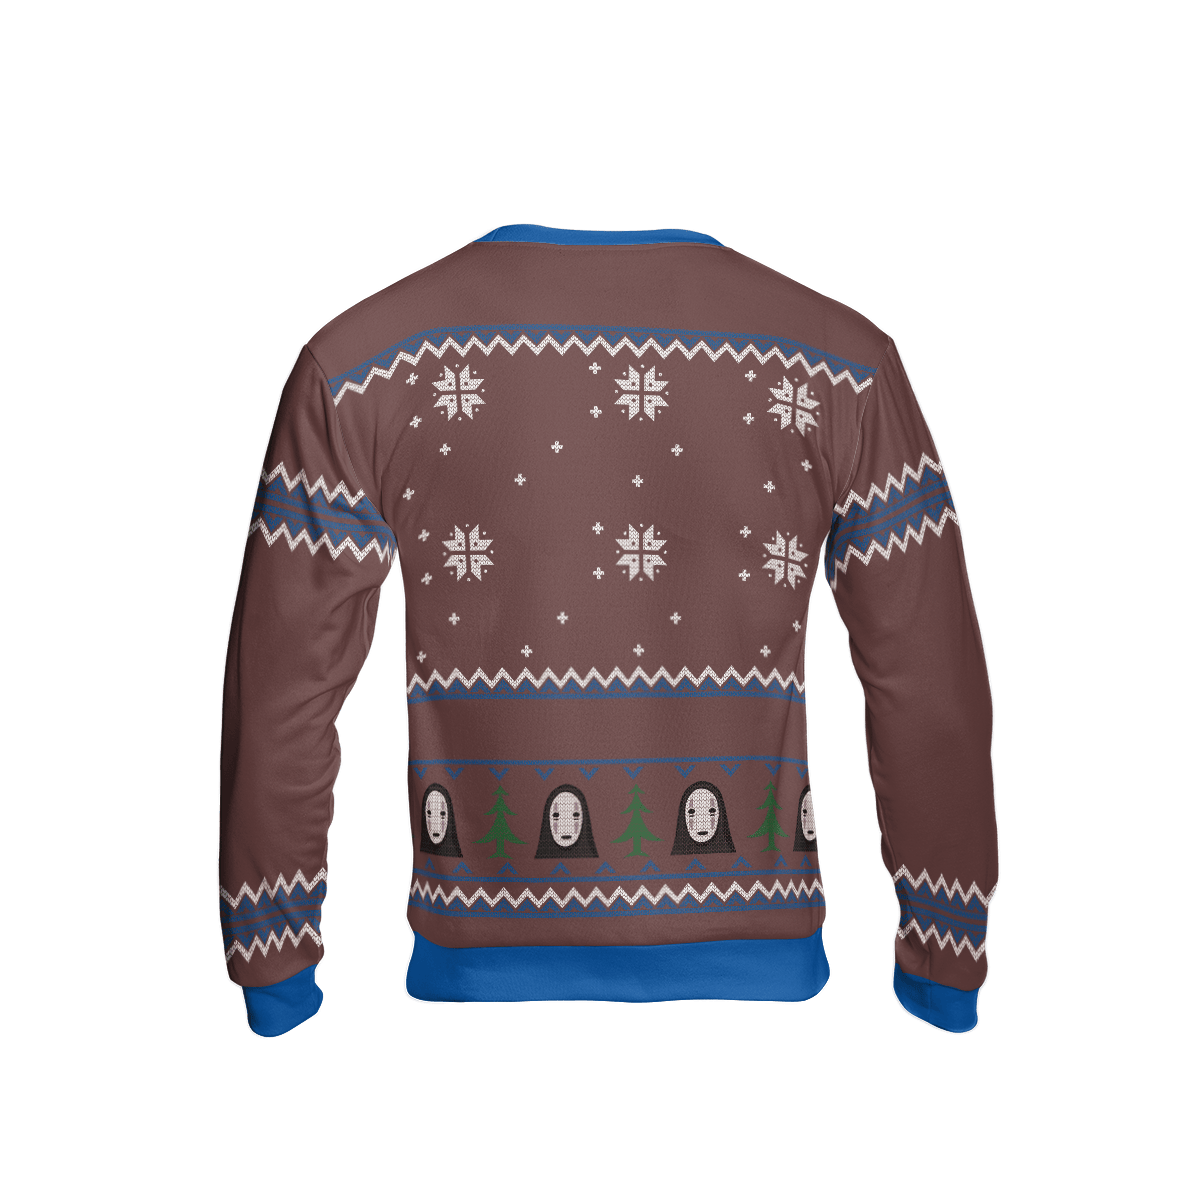 Spirited Away Characters Christmas 3D Sweatshirt Style 3